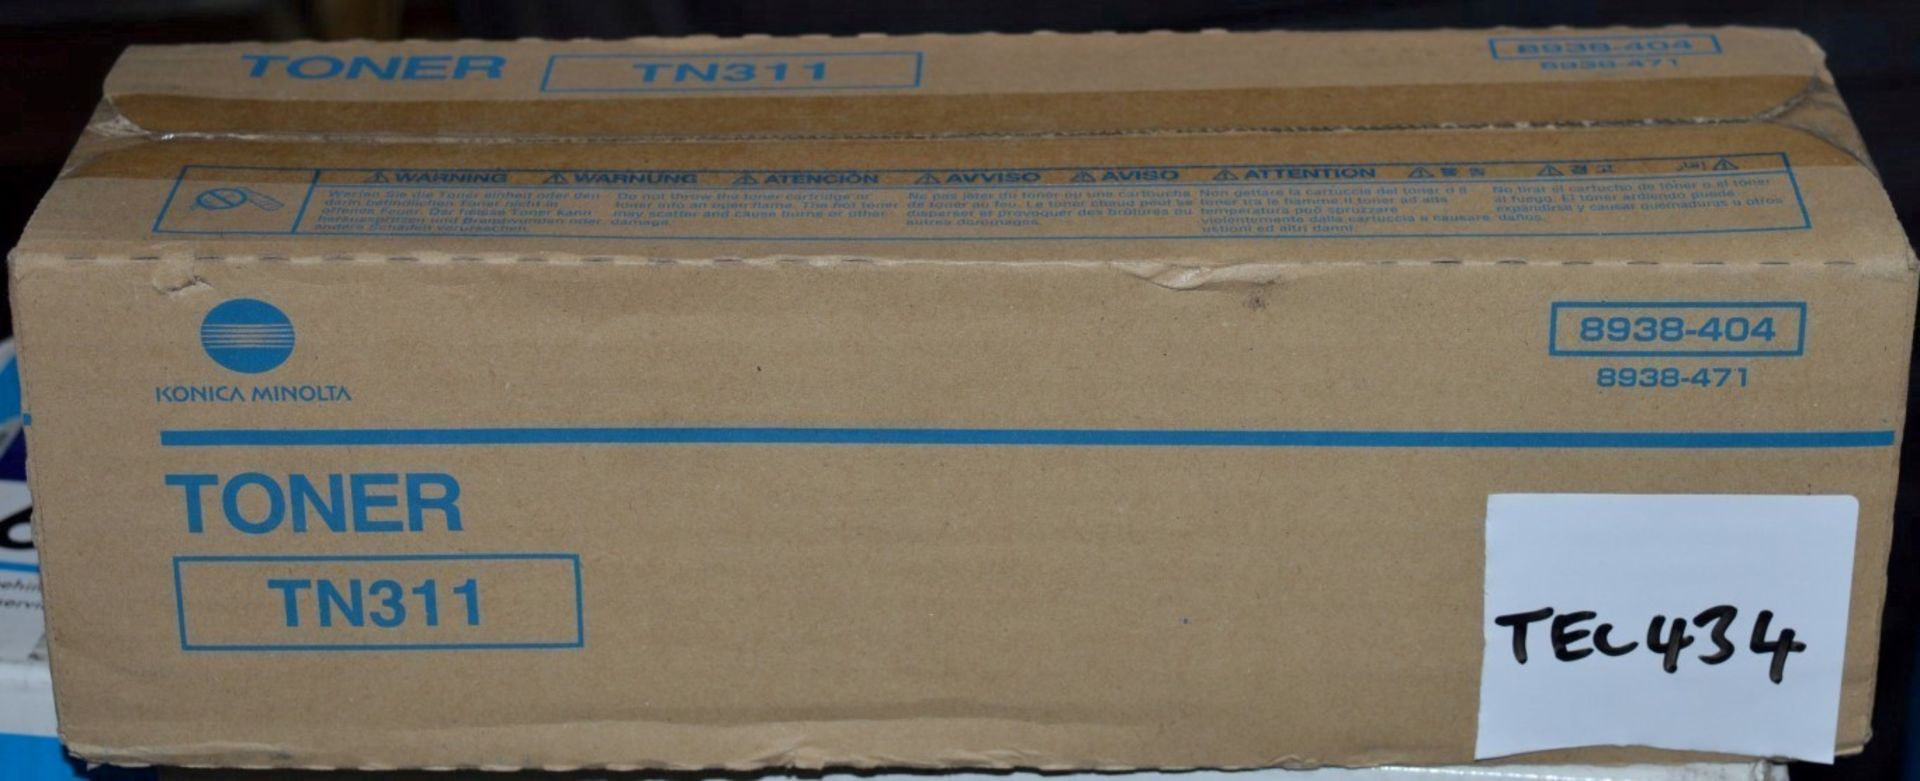 1 x Konica Minolta 8938-404 (TN-311) Toner Cartridge Black - 17.5K pages @ 6% Coverage - Genuine